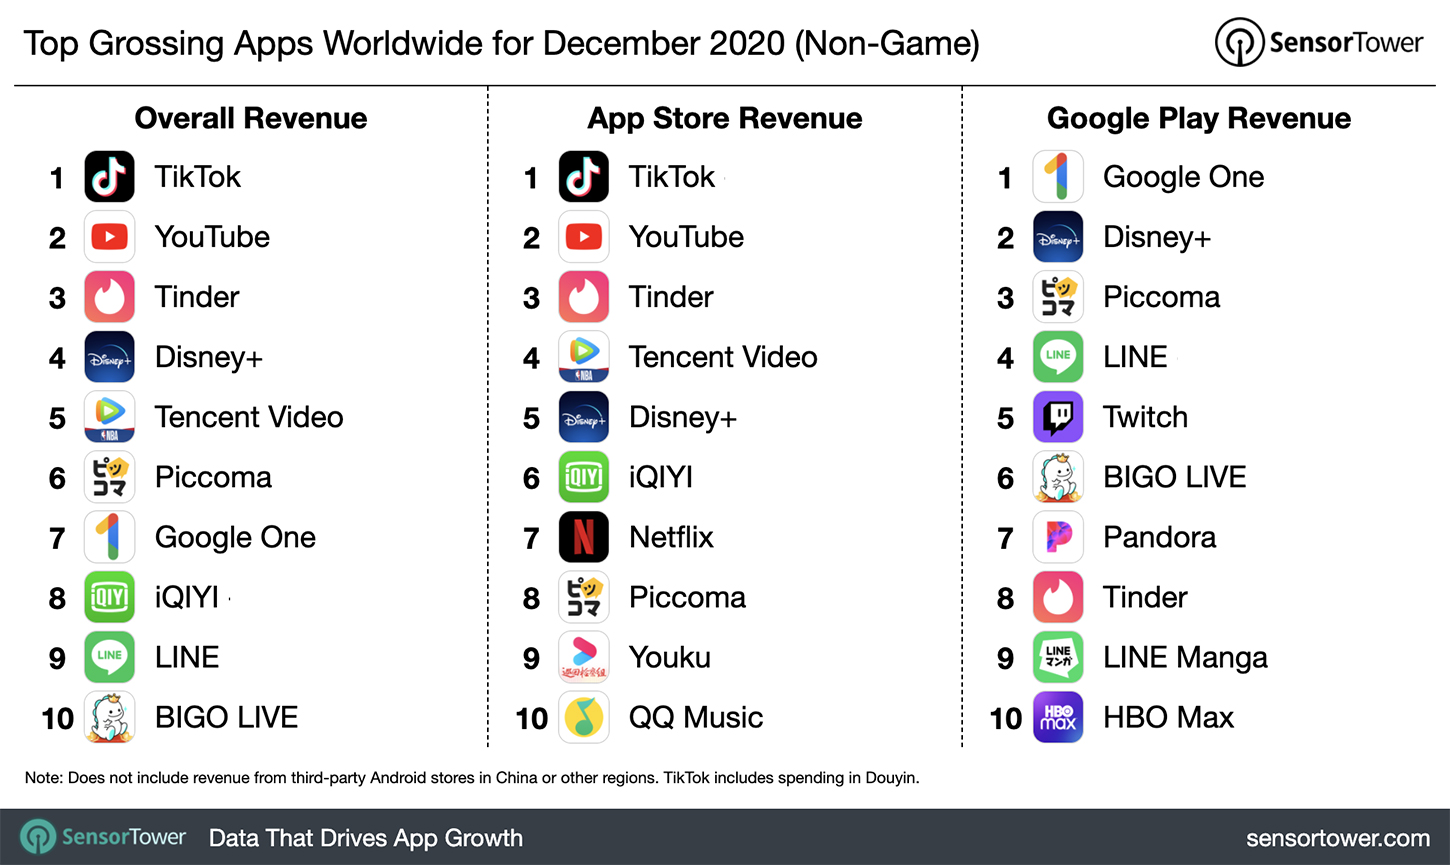 Top Grossing Apps Worldwide for December 2020